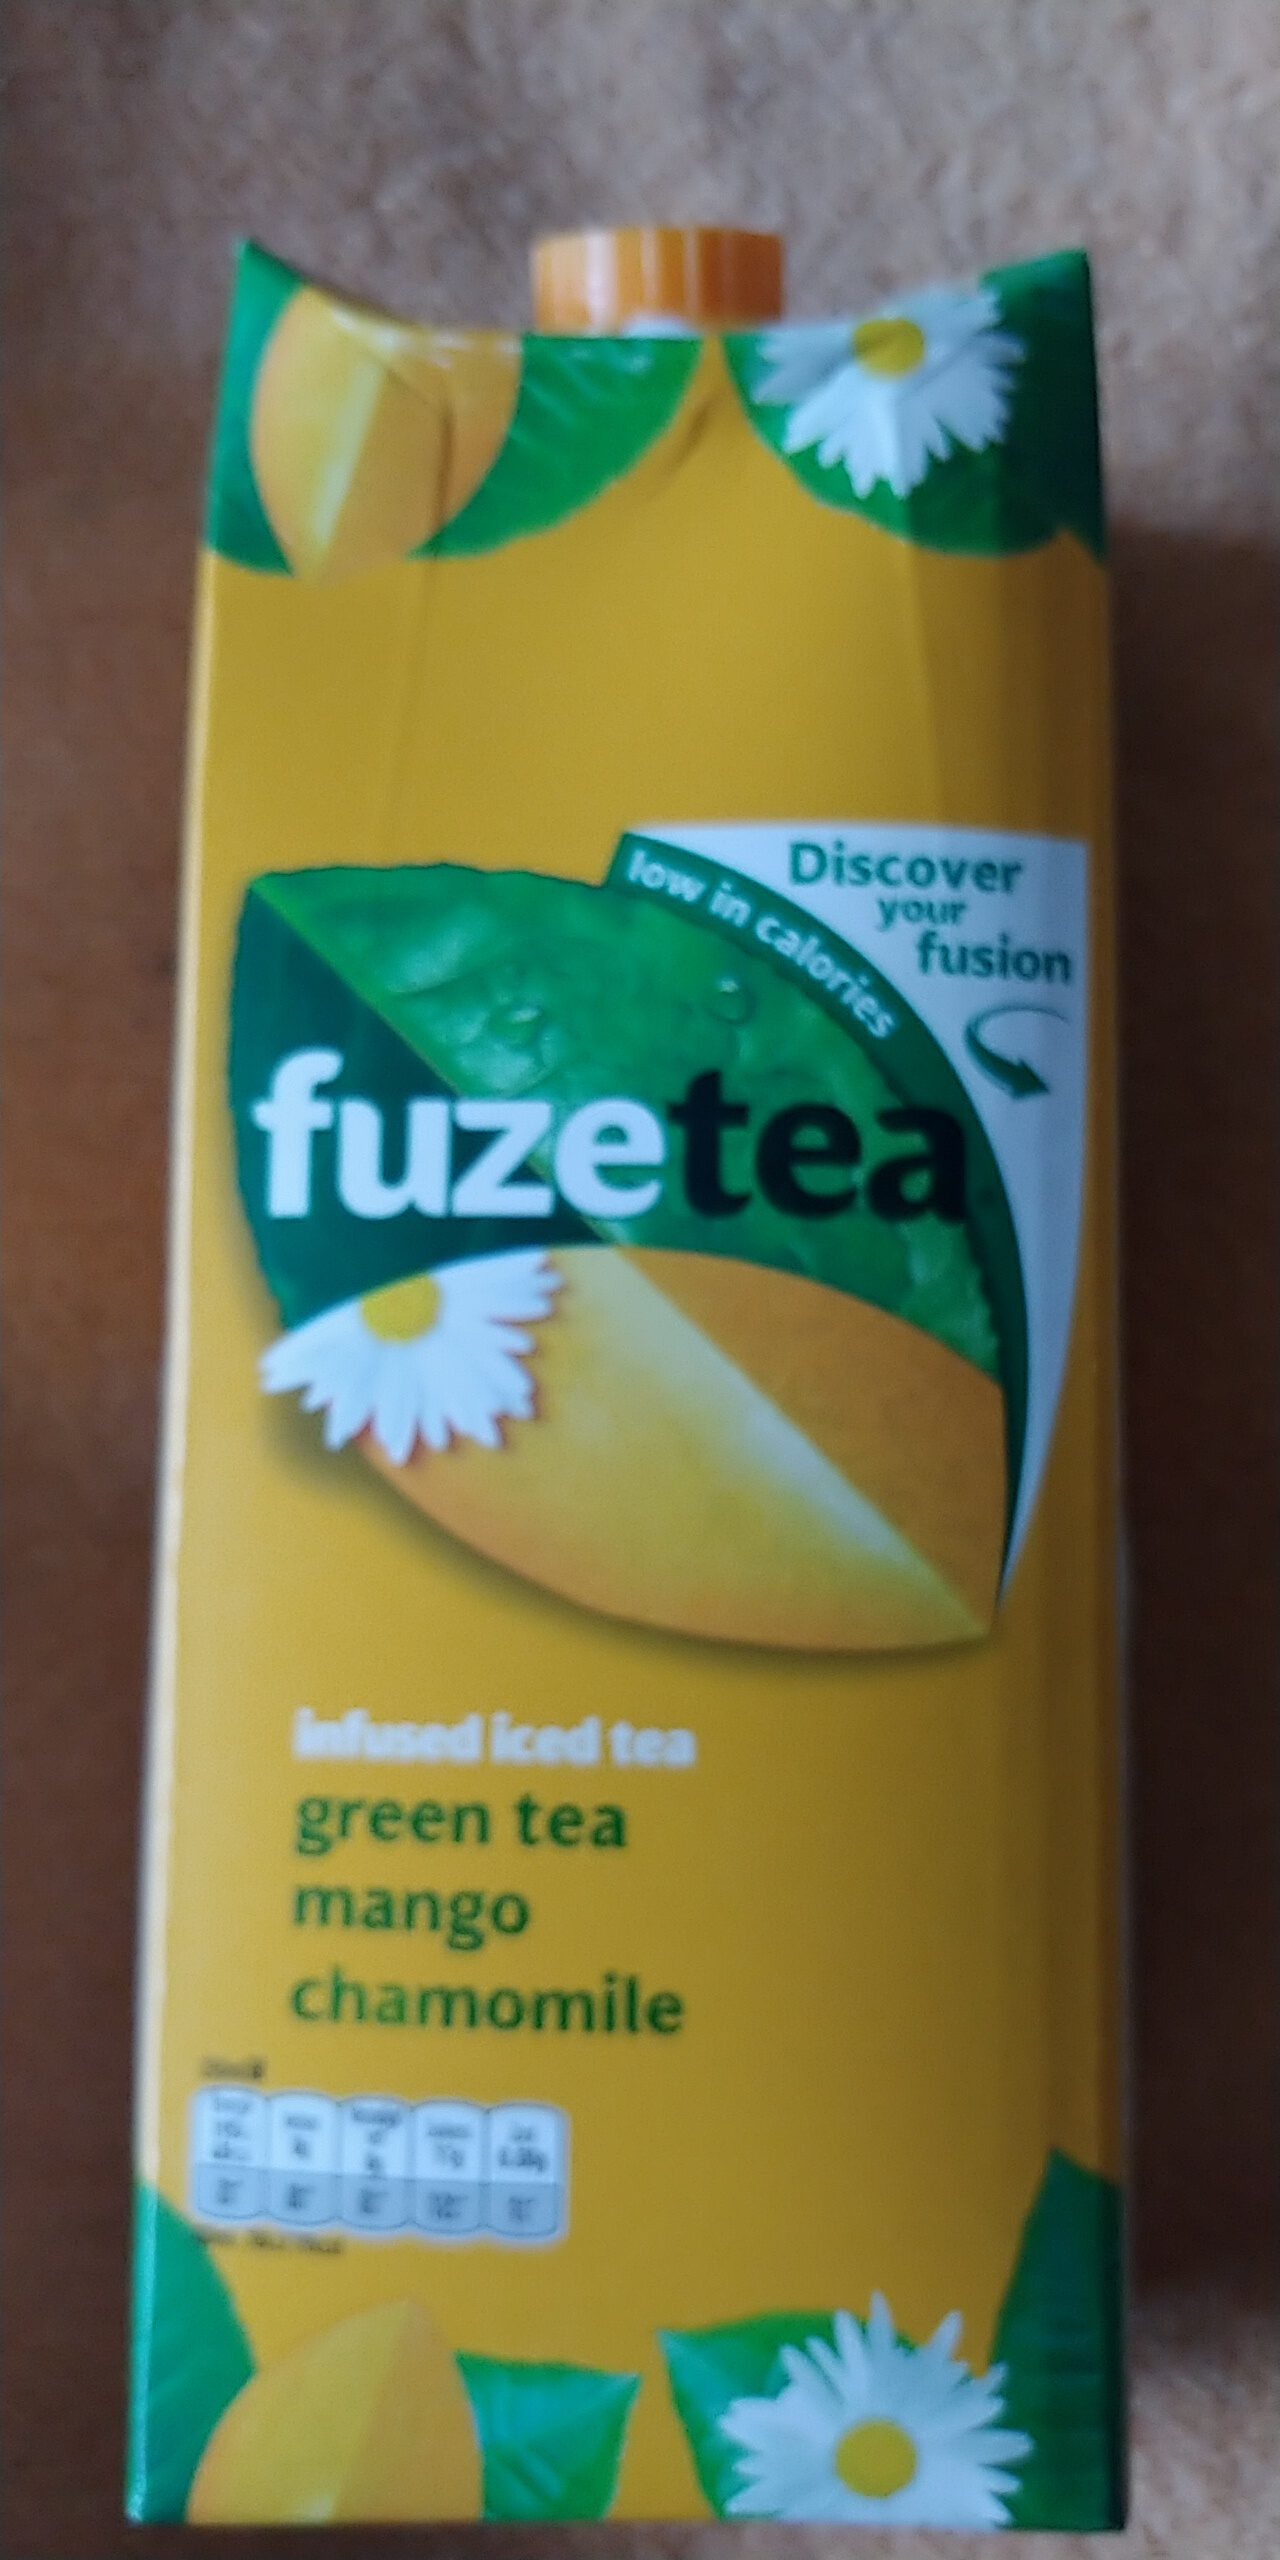 Fuze tea green tea mango chamomile - Producte - nl